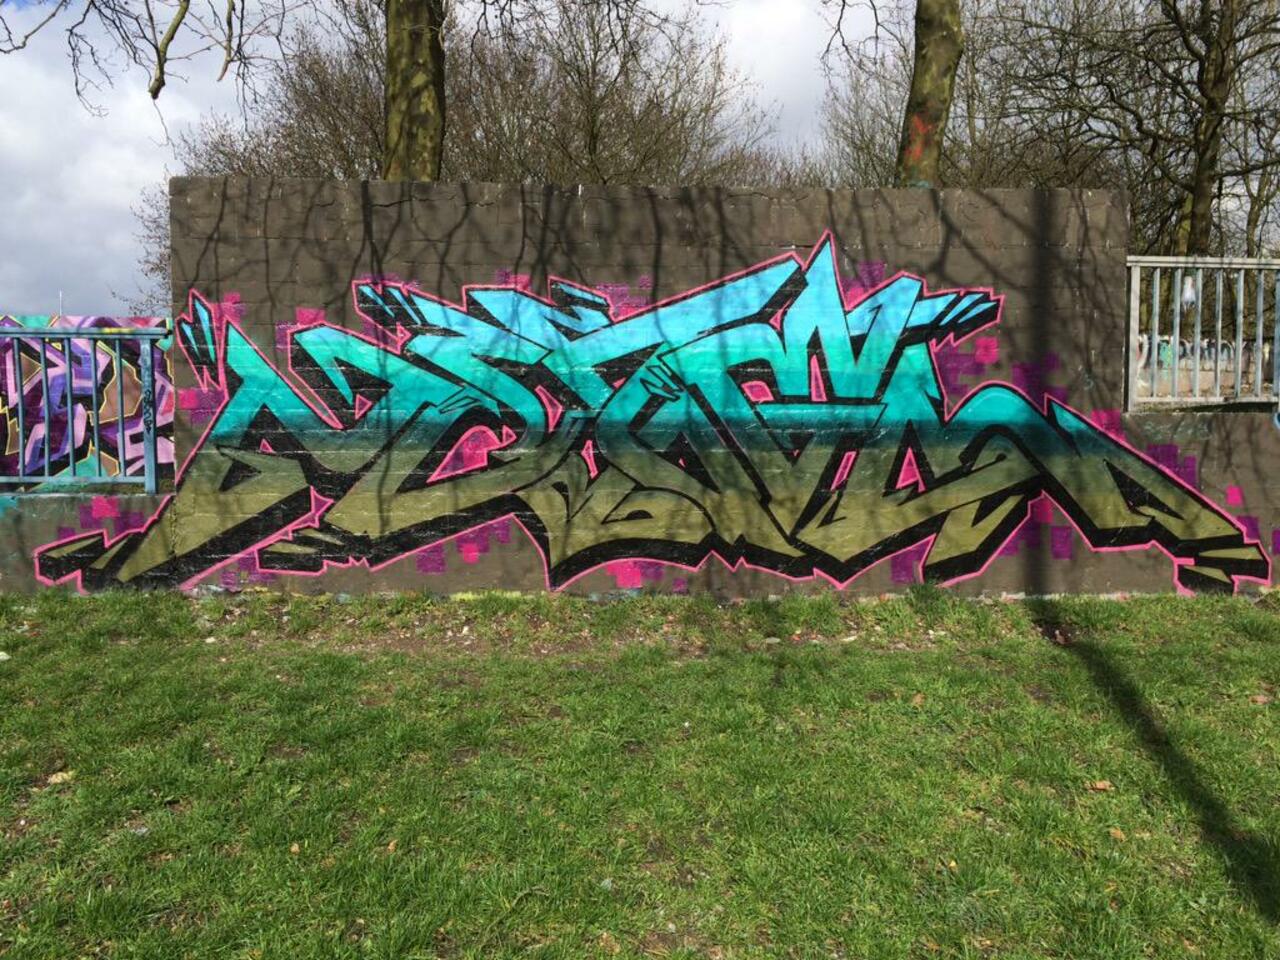 Wall of Fame Arnhem #graff #graffiti #GraffitiEsArte #streetart #arnhem #art #streetview http://t.co/sW0vIwpWvO